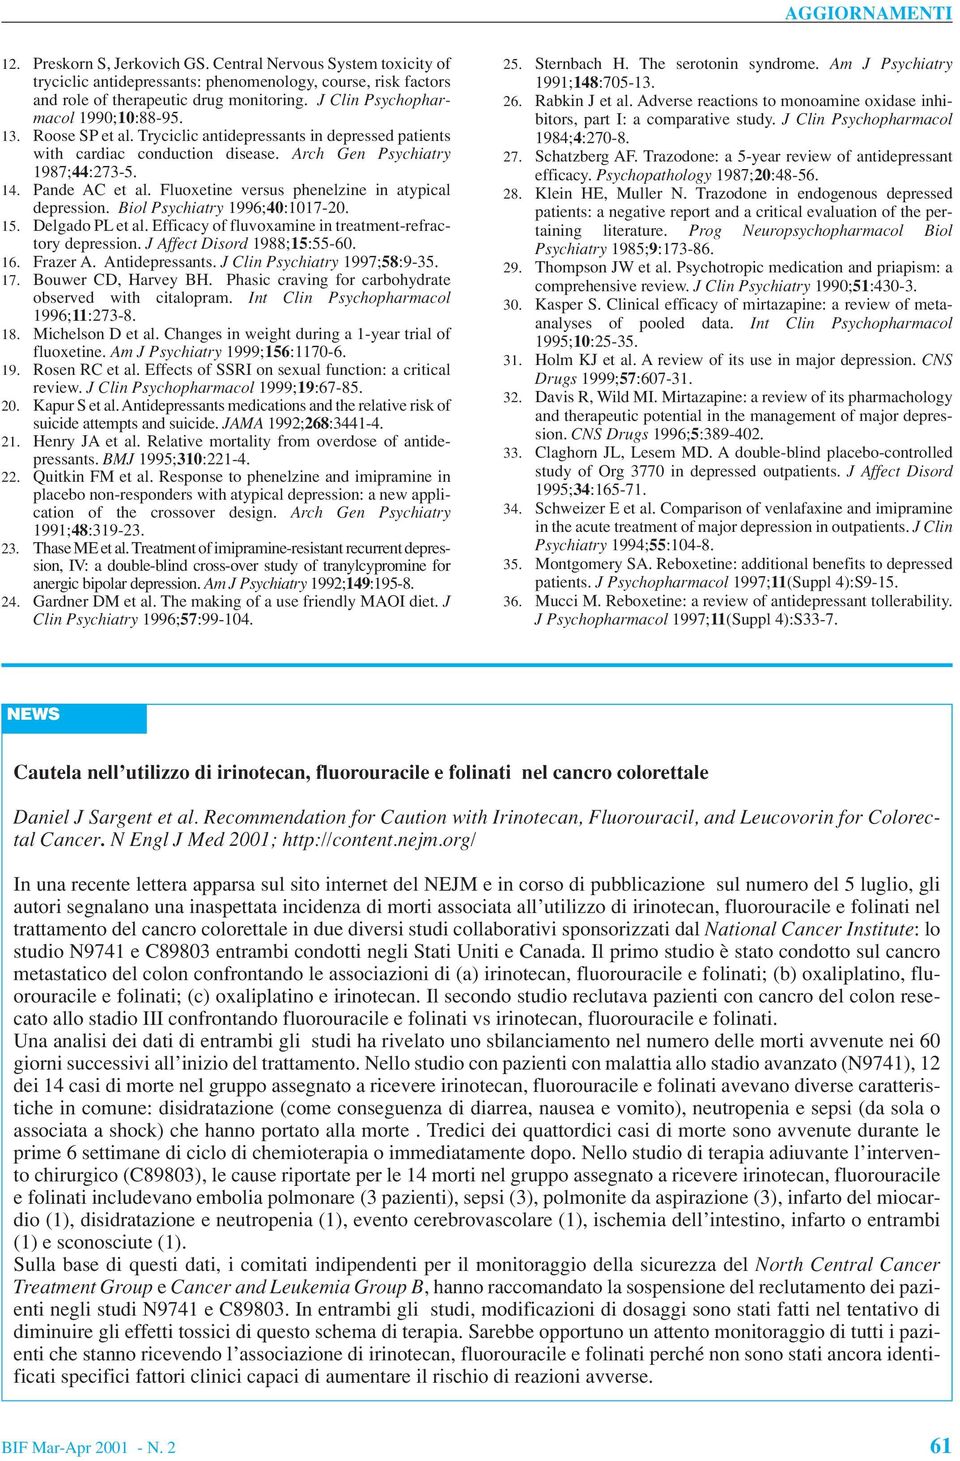 Fluoxetine versus phenelzine in atypical depression. Biol Psychiatry 1996;40:1017-20. 15. Delgado PL et al. Efficacy of fluvoxamine in treatment-refractory depression. J Affect Disord 1988;15:55-60.